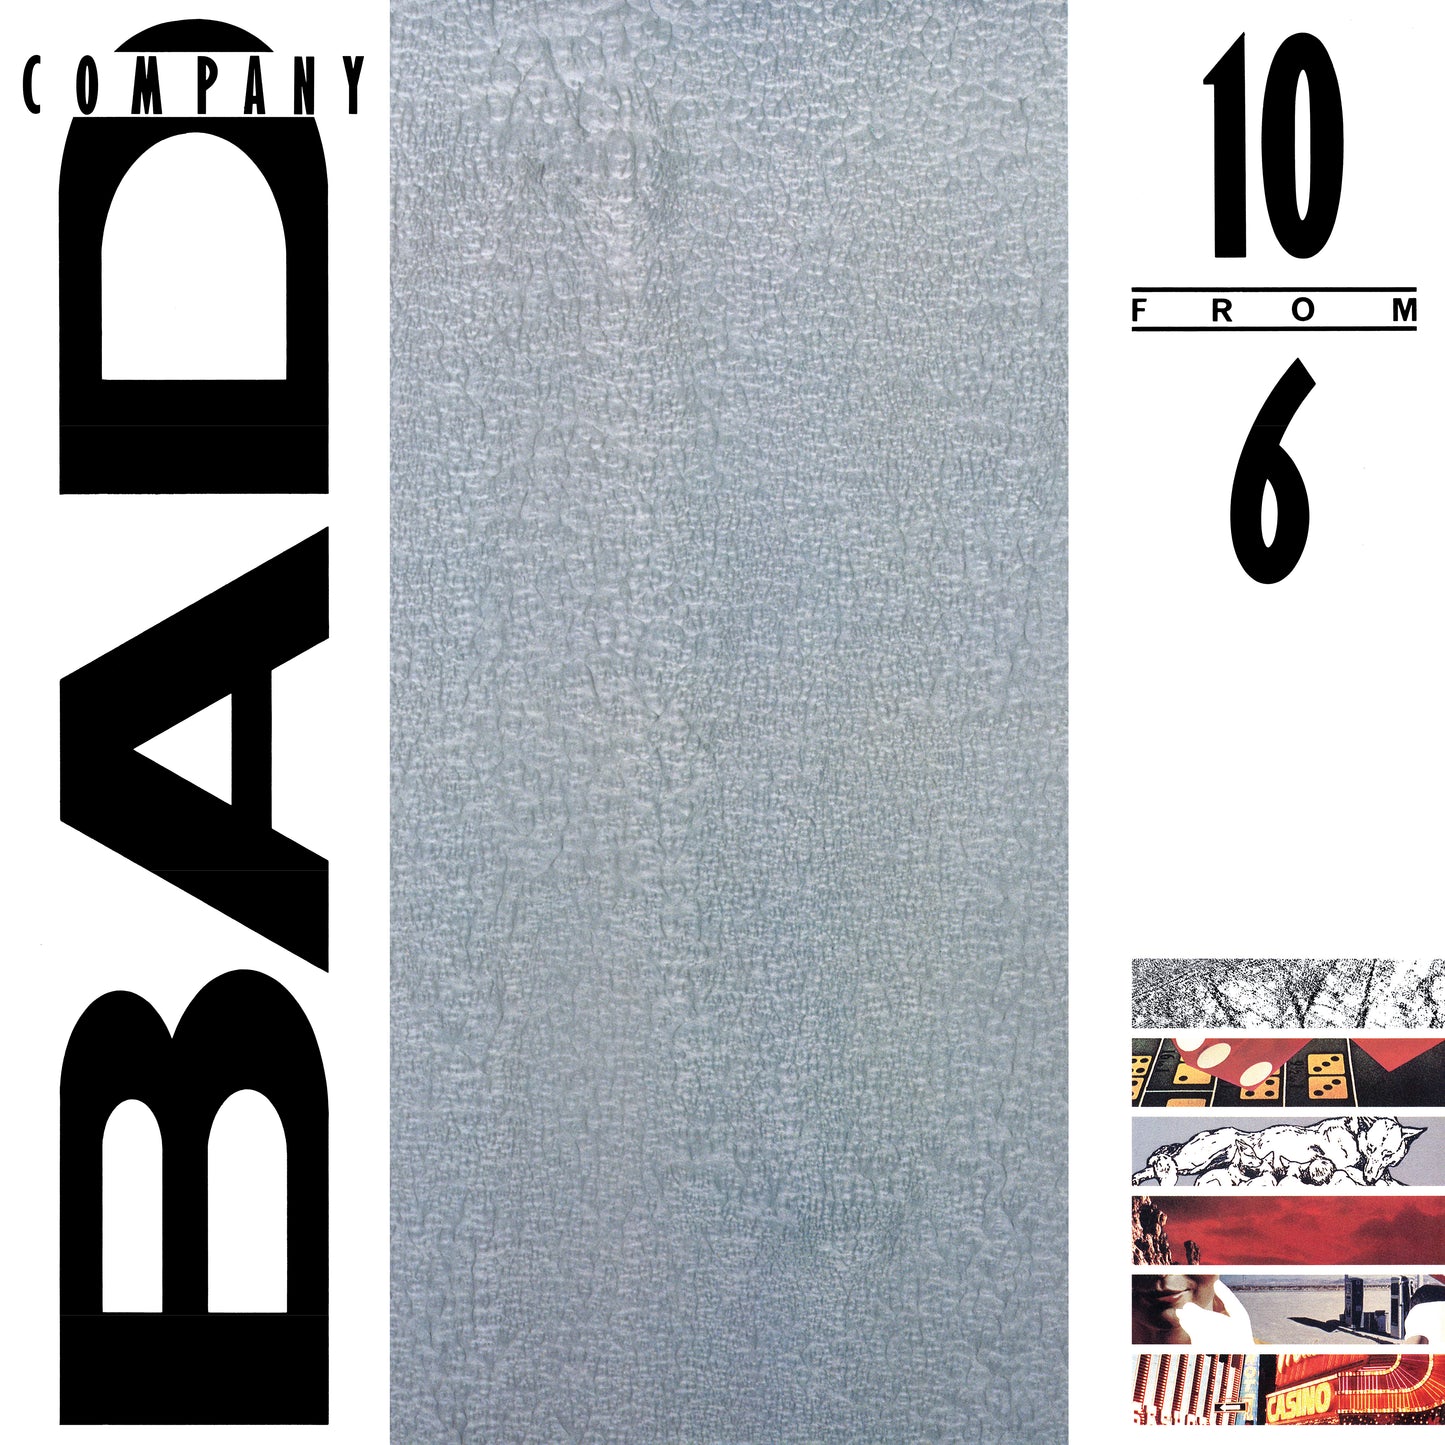 Bad Company - 10 From 6 (ROCKTOBER) (Translucent Milky Clear Vinyl) (LP) M